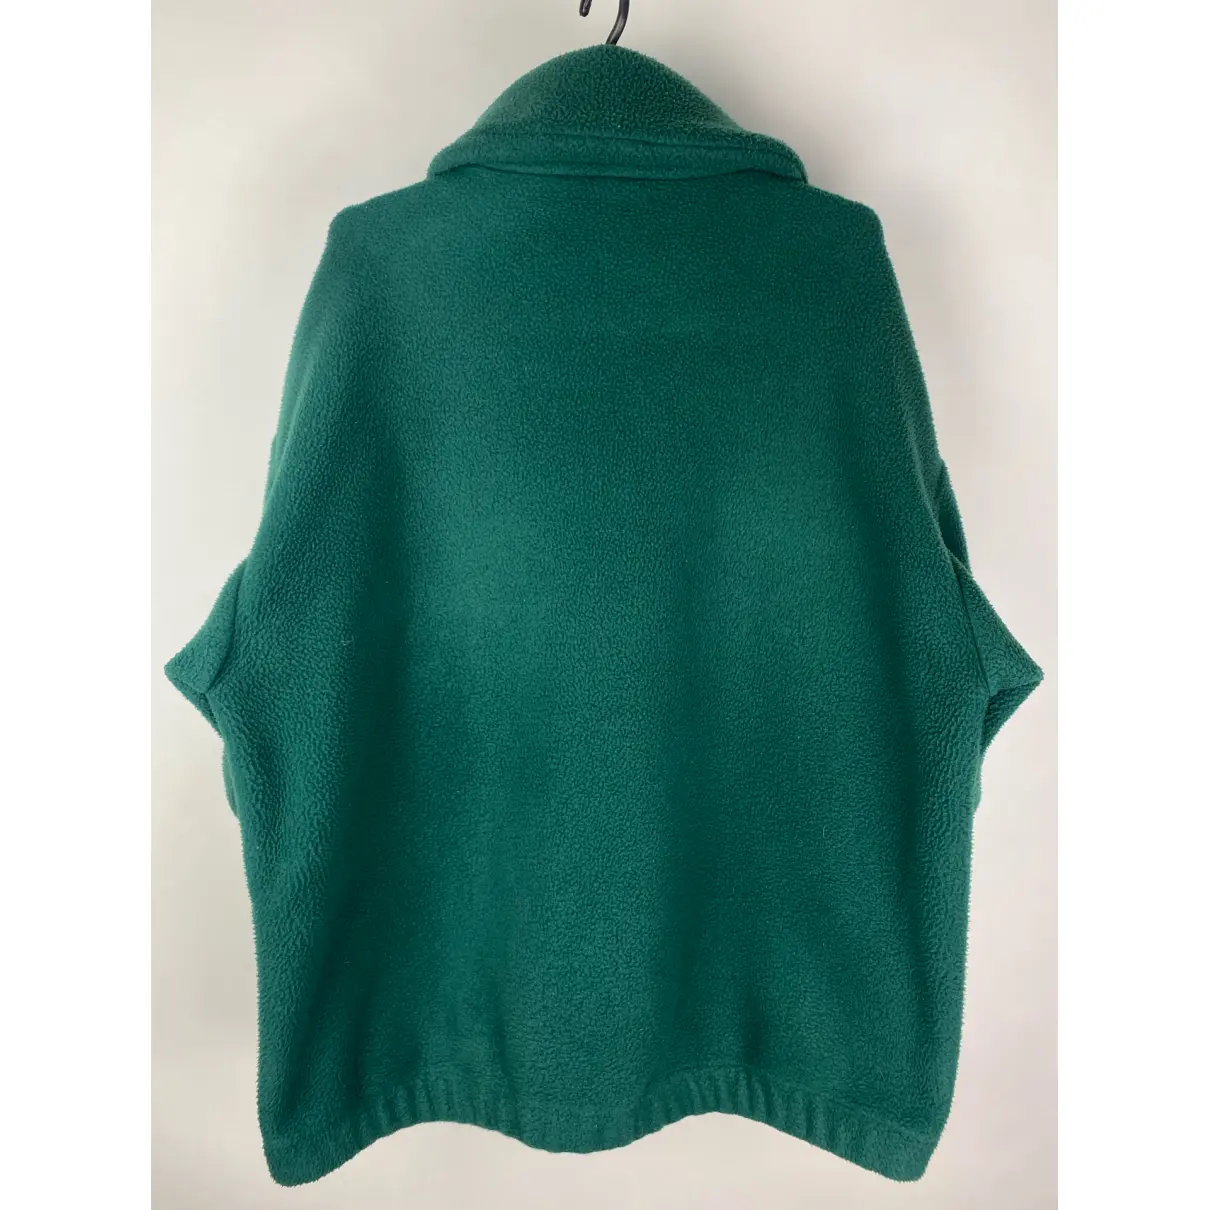 Buy The North Face Sweatshirt online - Vintage